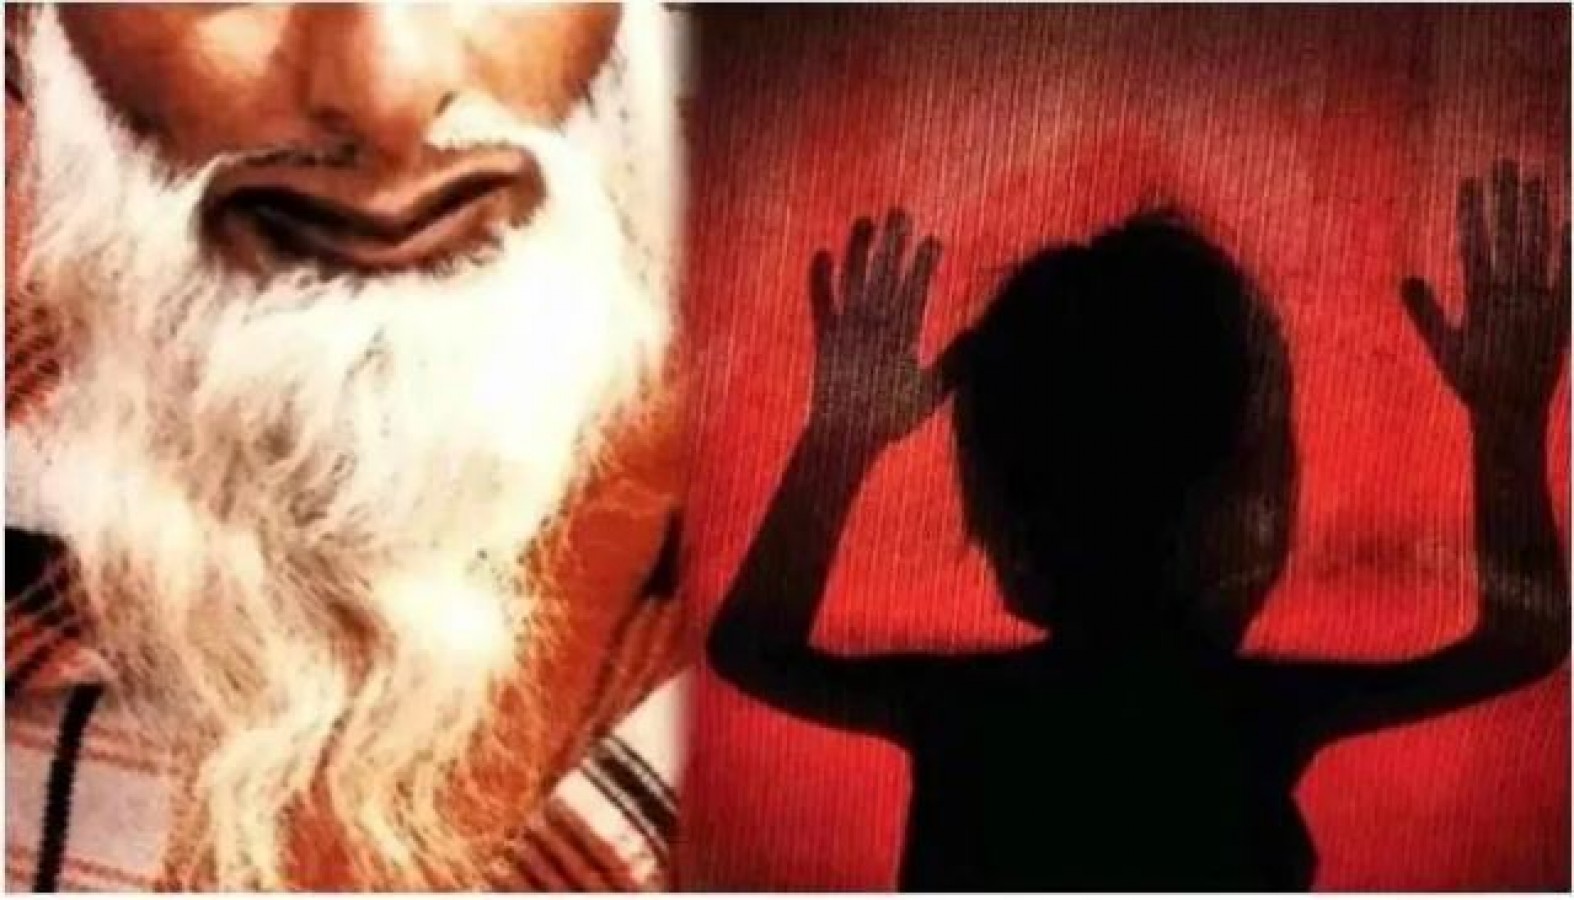 Maulvi Samruddin molested a student in Madrasa, has made 6 children victims of lust | NewsTrack English 1